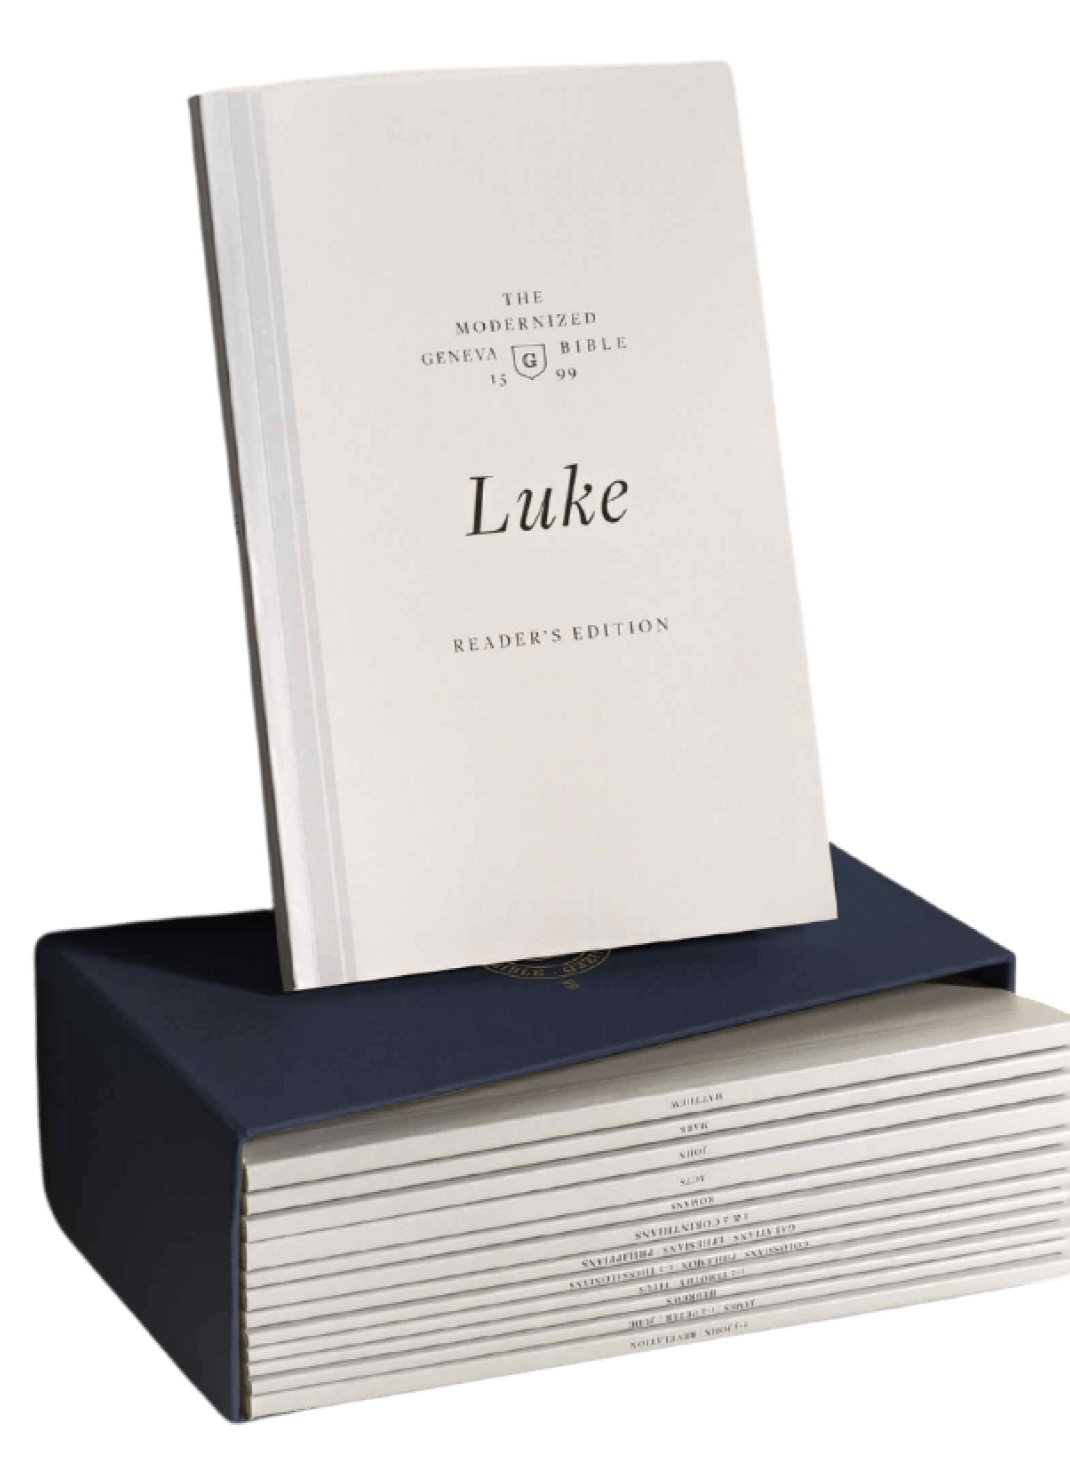 Modernized Geneva Bible: New Testament Box Set